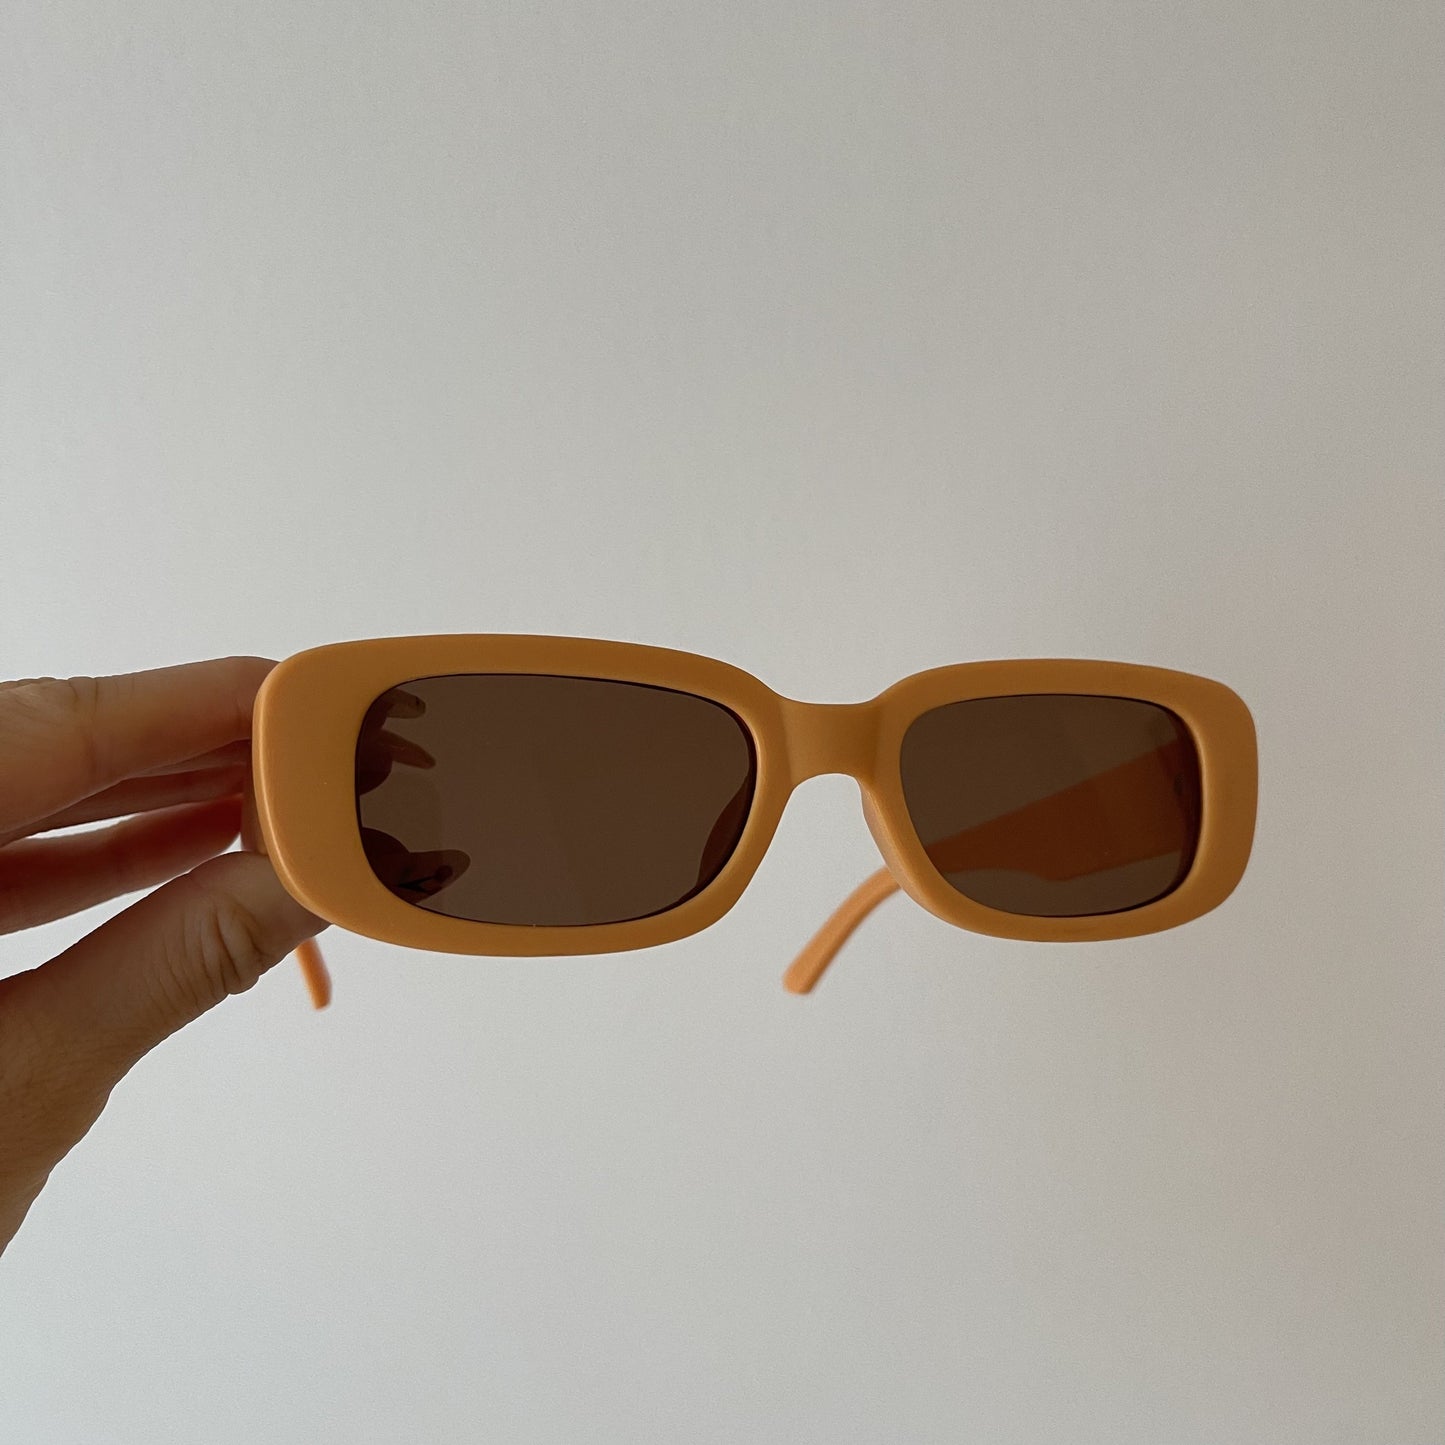 Apricot Sunglasses - Veooy